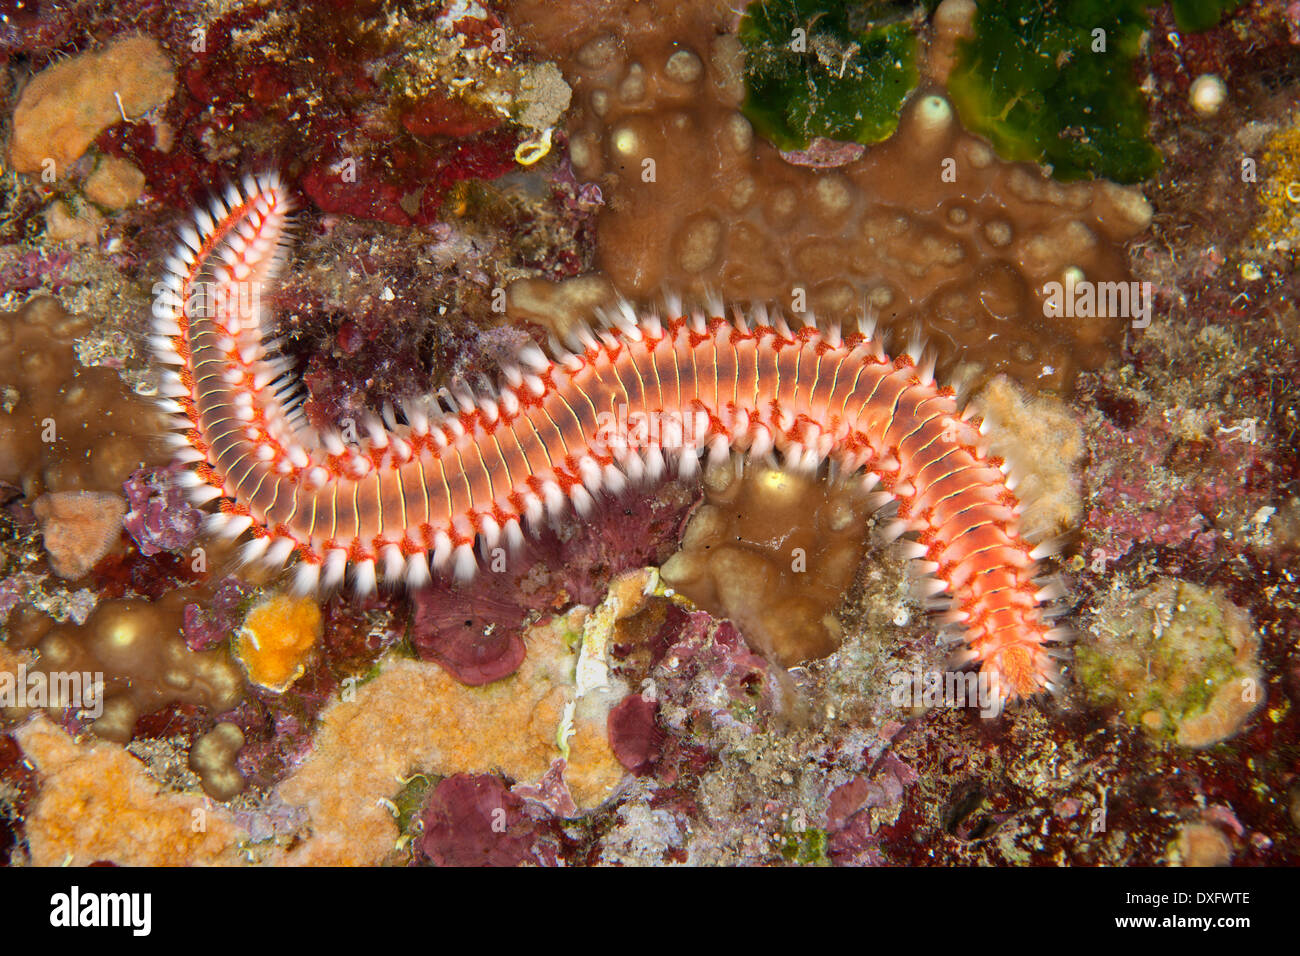 Bearded Fireworm, Hermodice carunculata, Dubrovnik, Adriatic Sea, Croatia Stock Photo